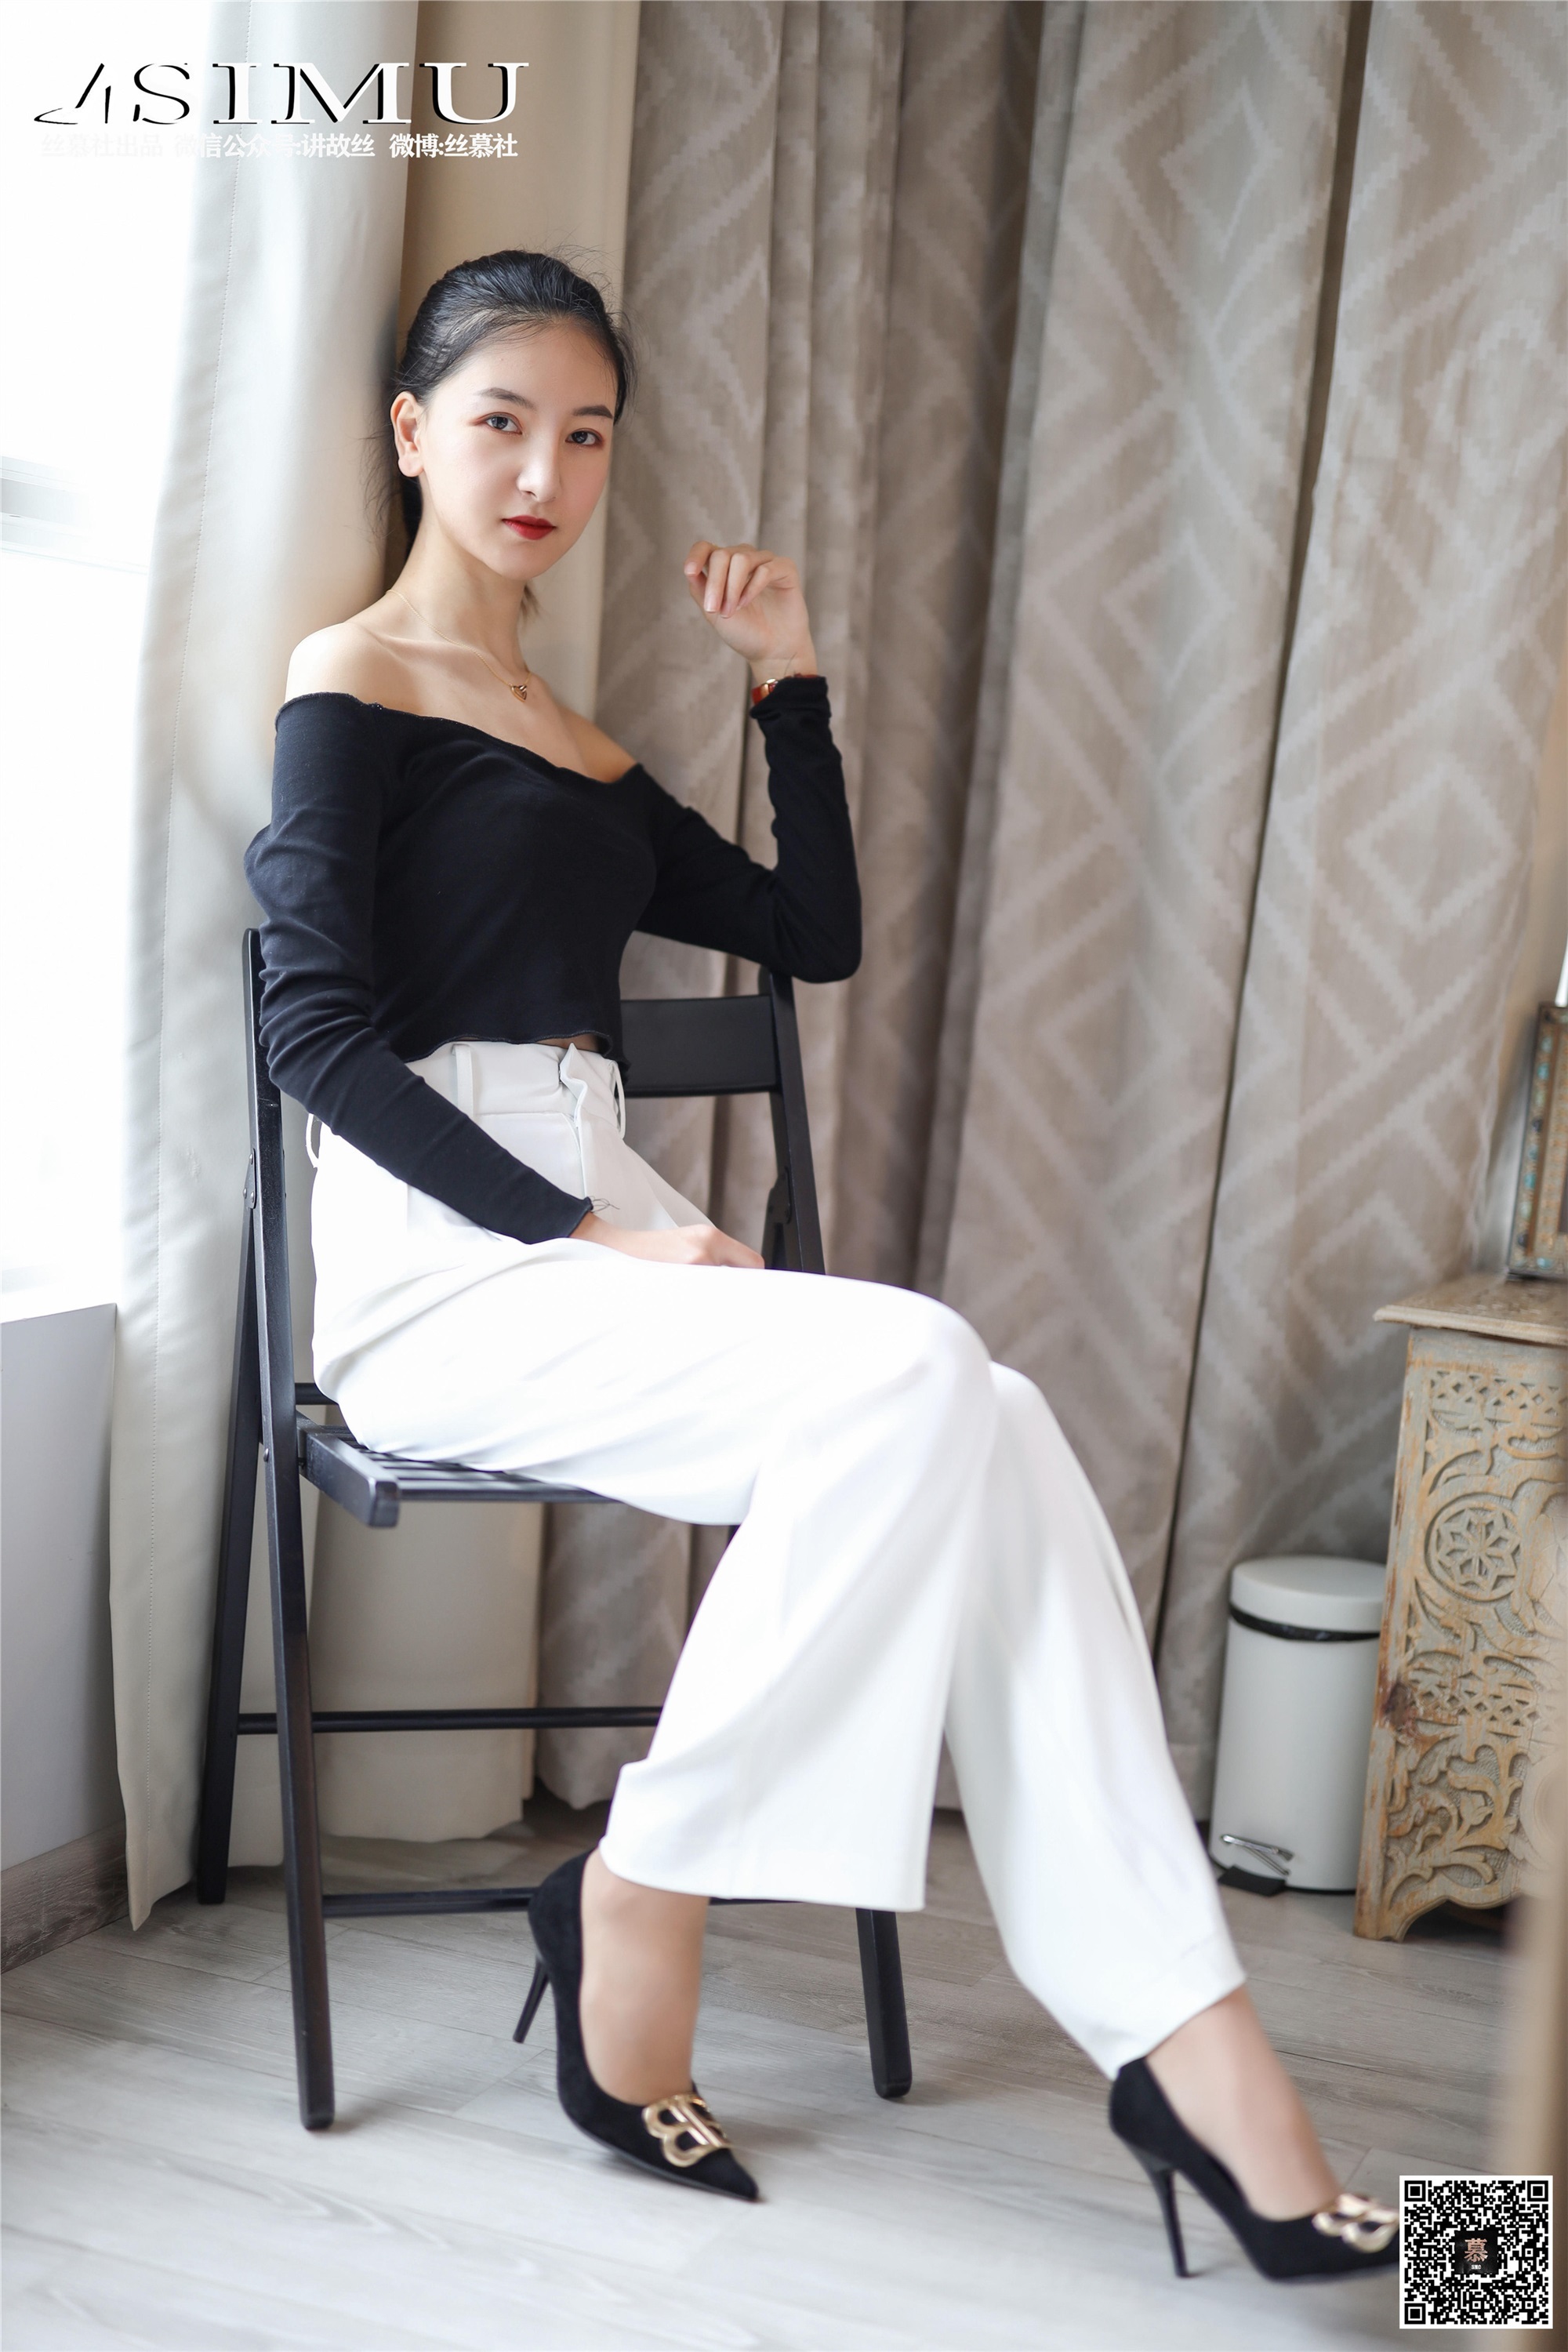 Simu photo sm225 Mingming's skirt or trousers